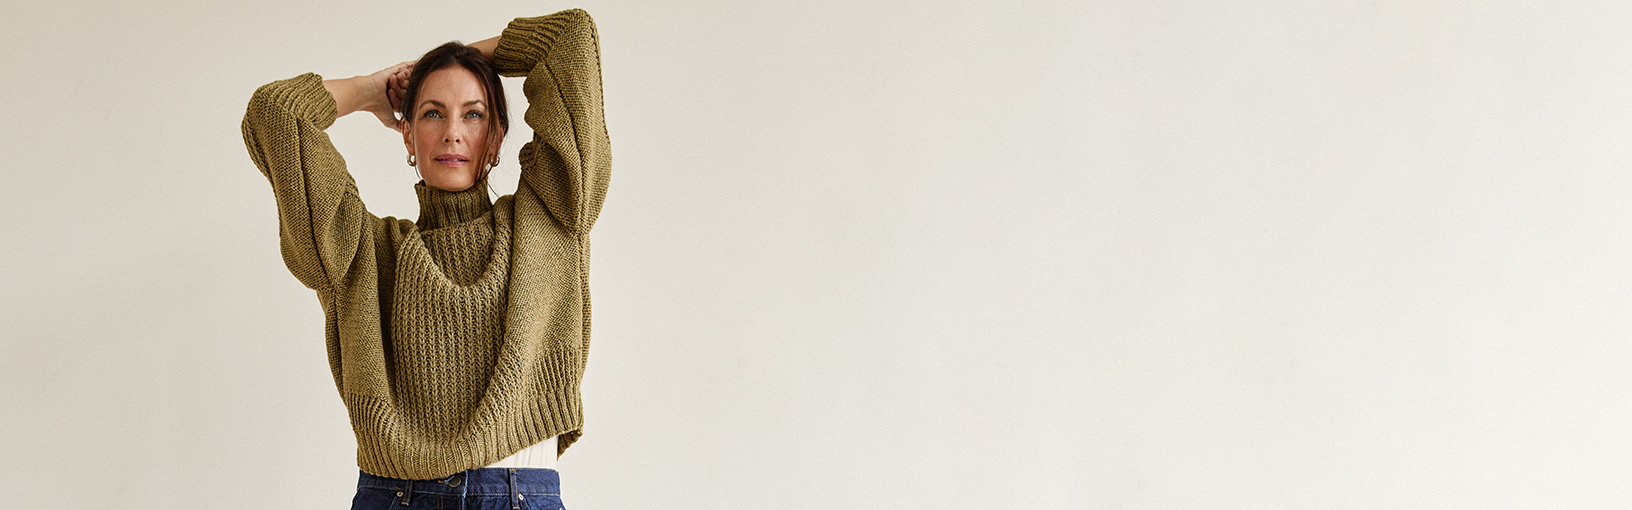 INNOVATIVE, ERGONOMIC - HIGHEST QUALITY Lana Grossa Needles | CARDIGAN NEEDLES